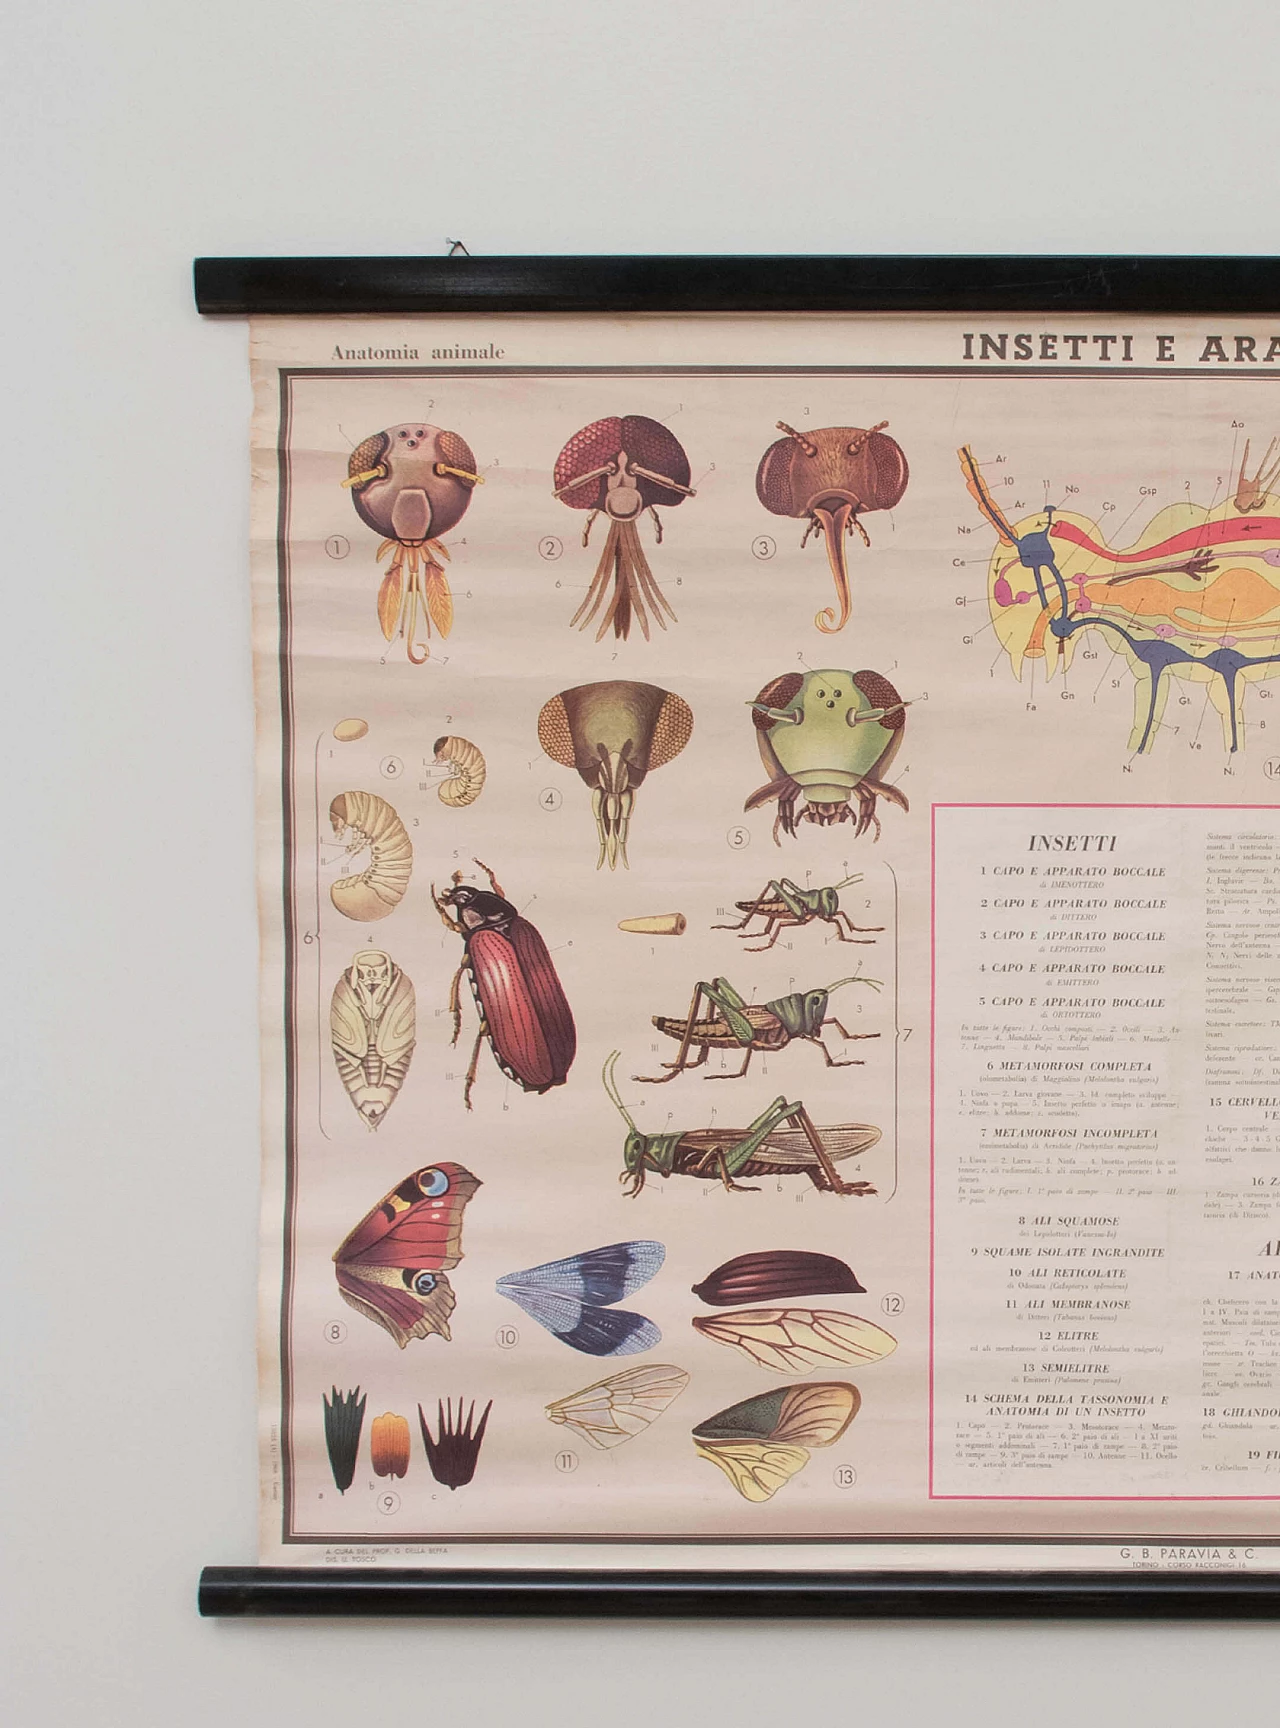 Stampa didattica a tema insetti, Paravia, 1968 1088776